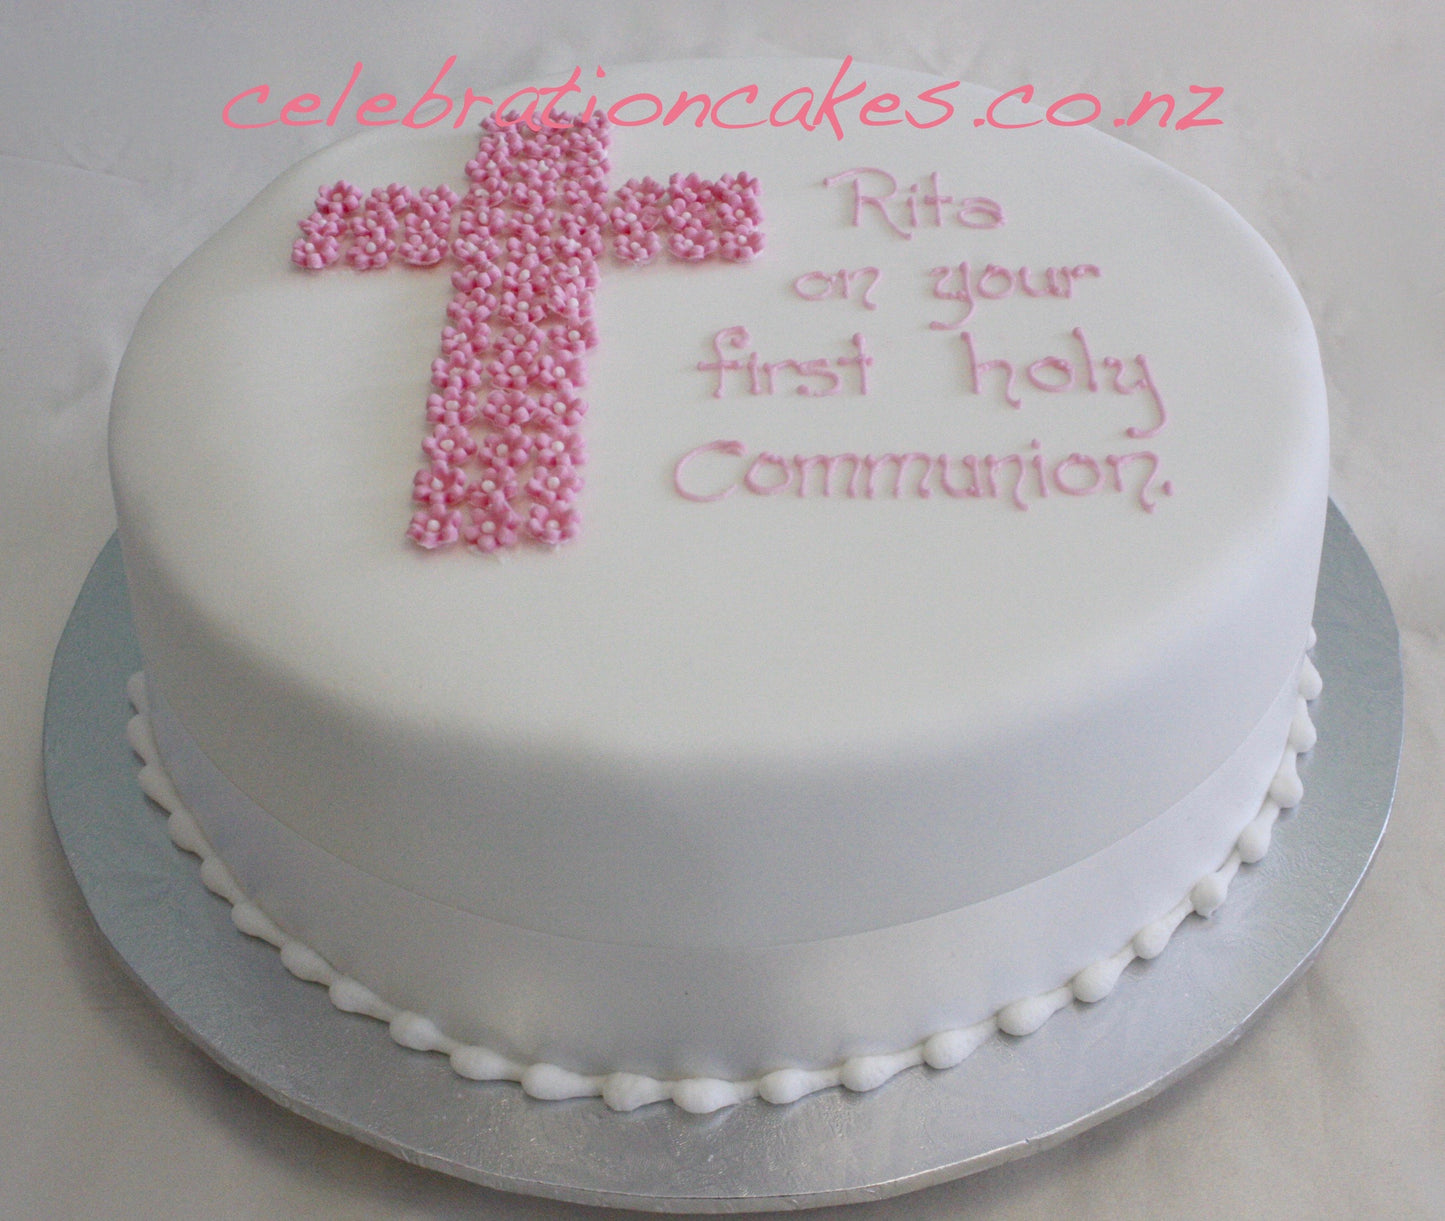 Rita , cake